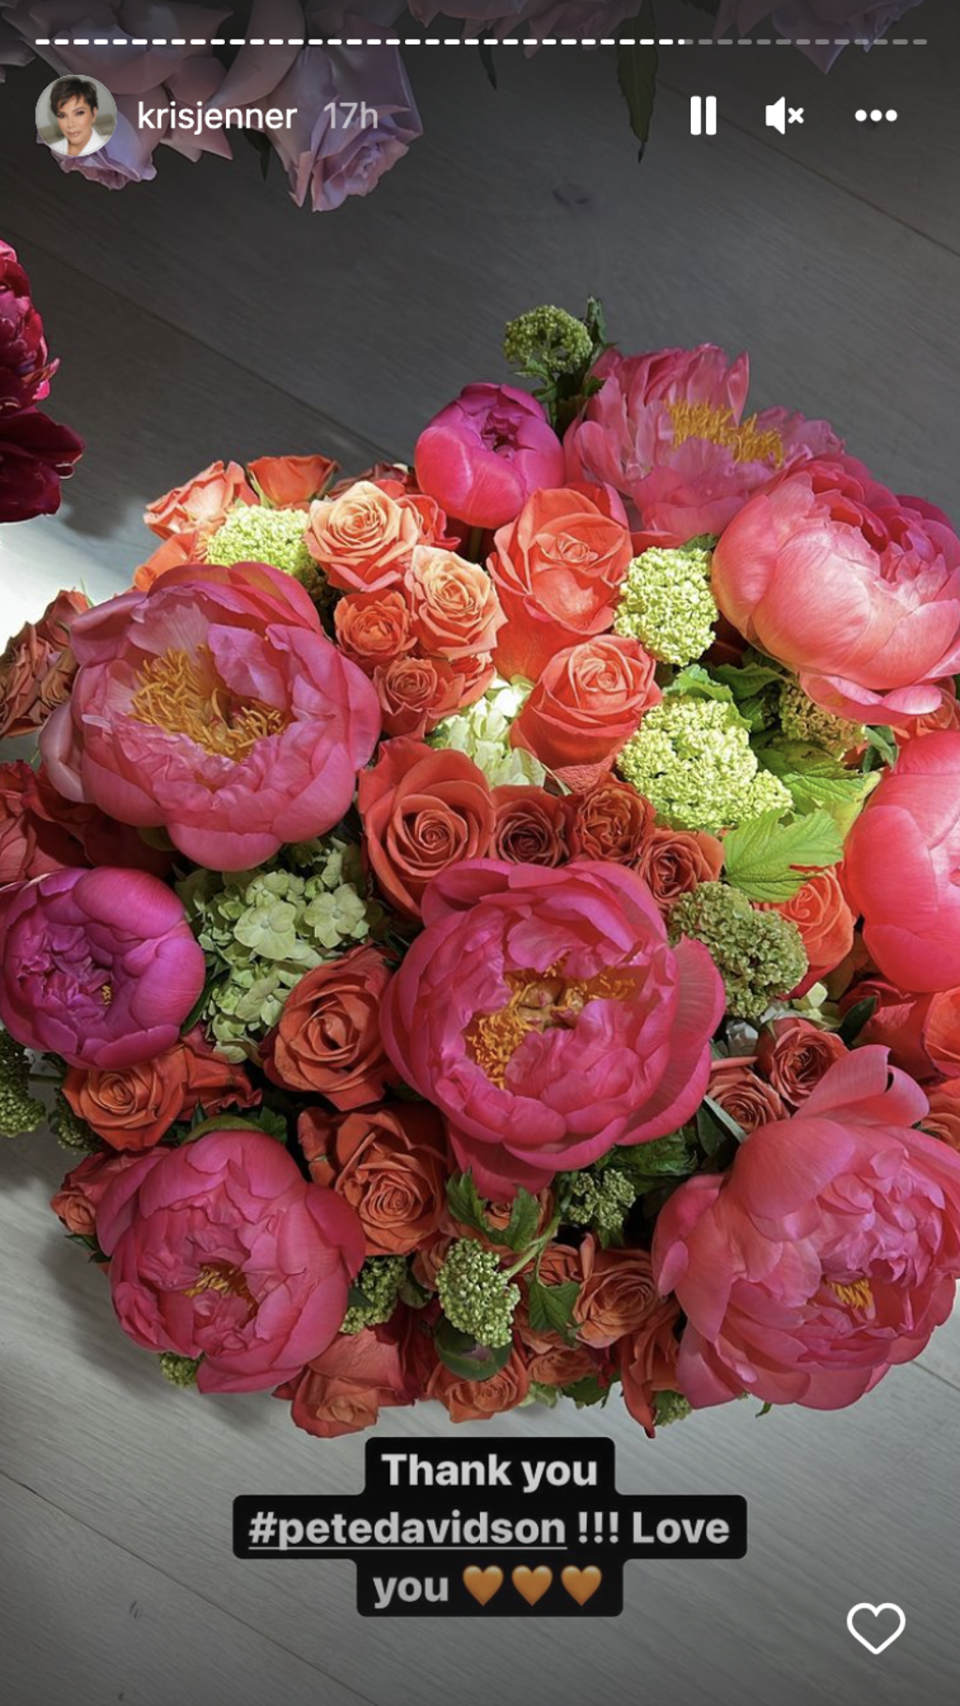 Kris Jenner receives flowers from Pete Davidson for Mother’s Day (Instagram / Kris Jenner)